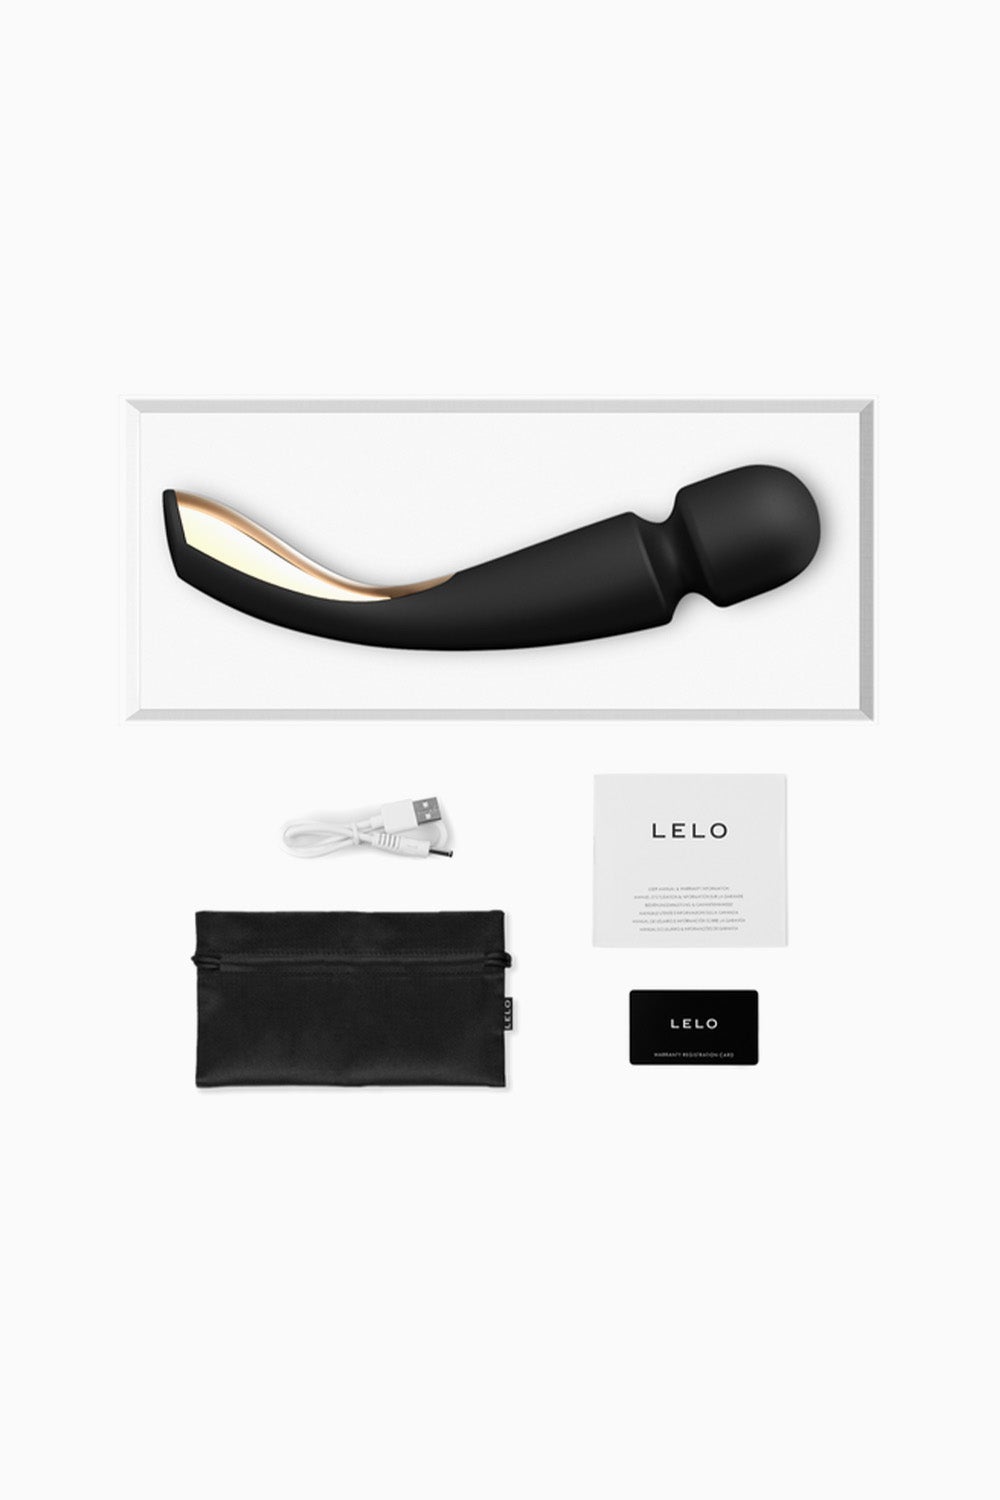 Lelo Smart Wand 2 Vibrator Massager - Black, 11.5 Inches